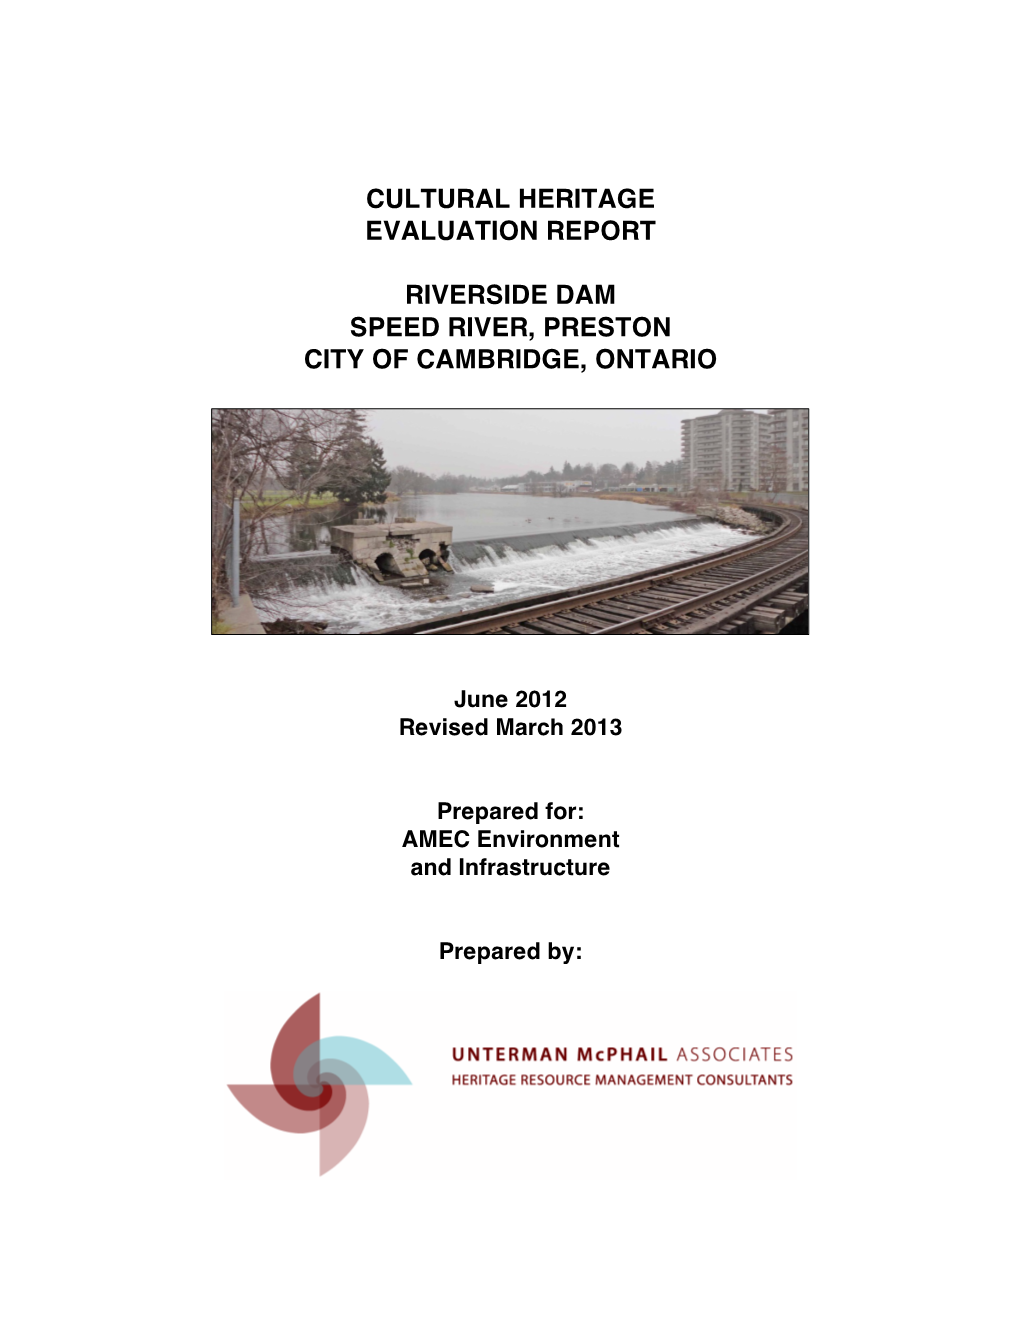 Cultural Heritage Evaluation Report Riverside Dam Speed River, Preston